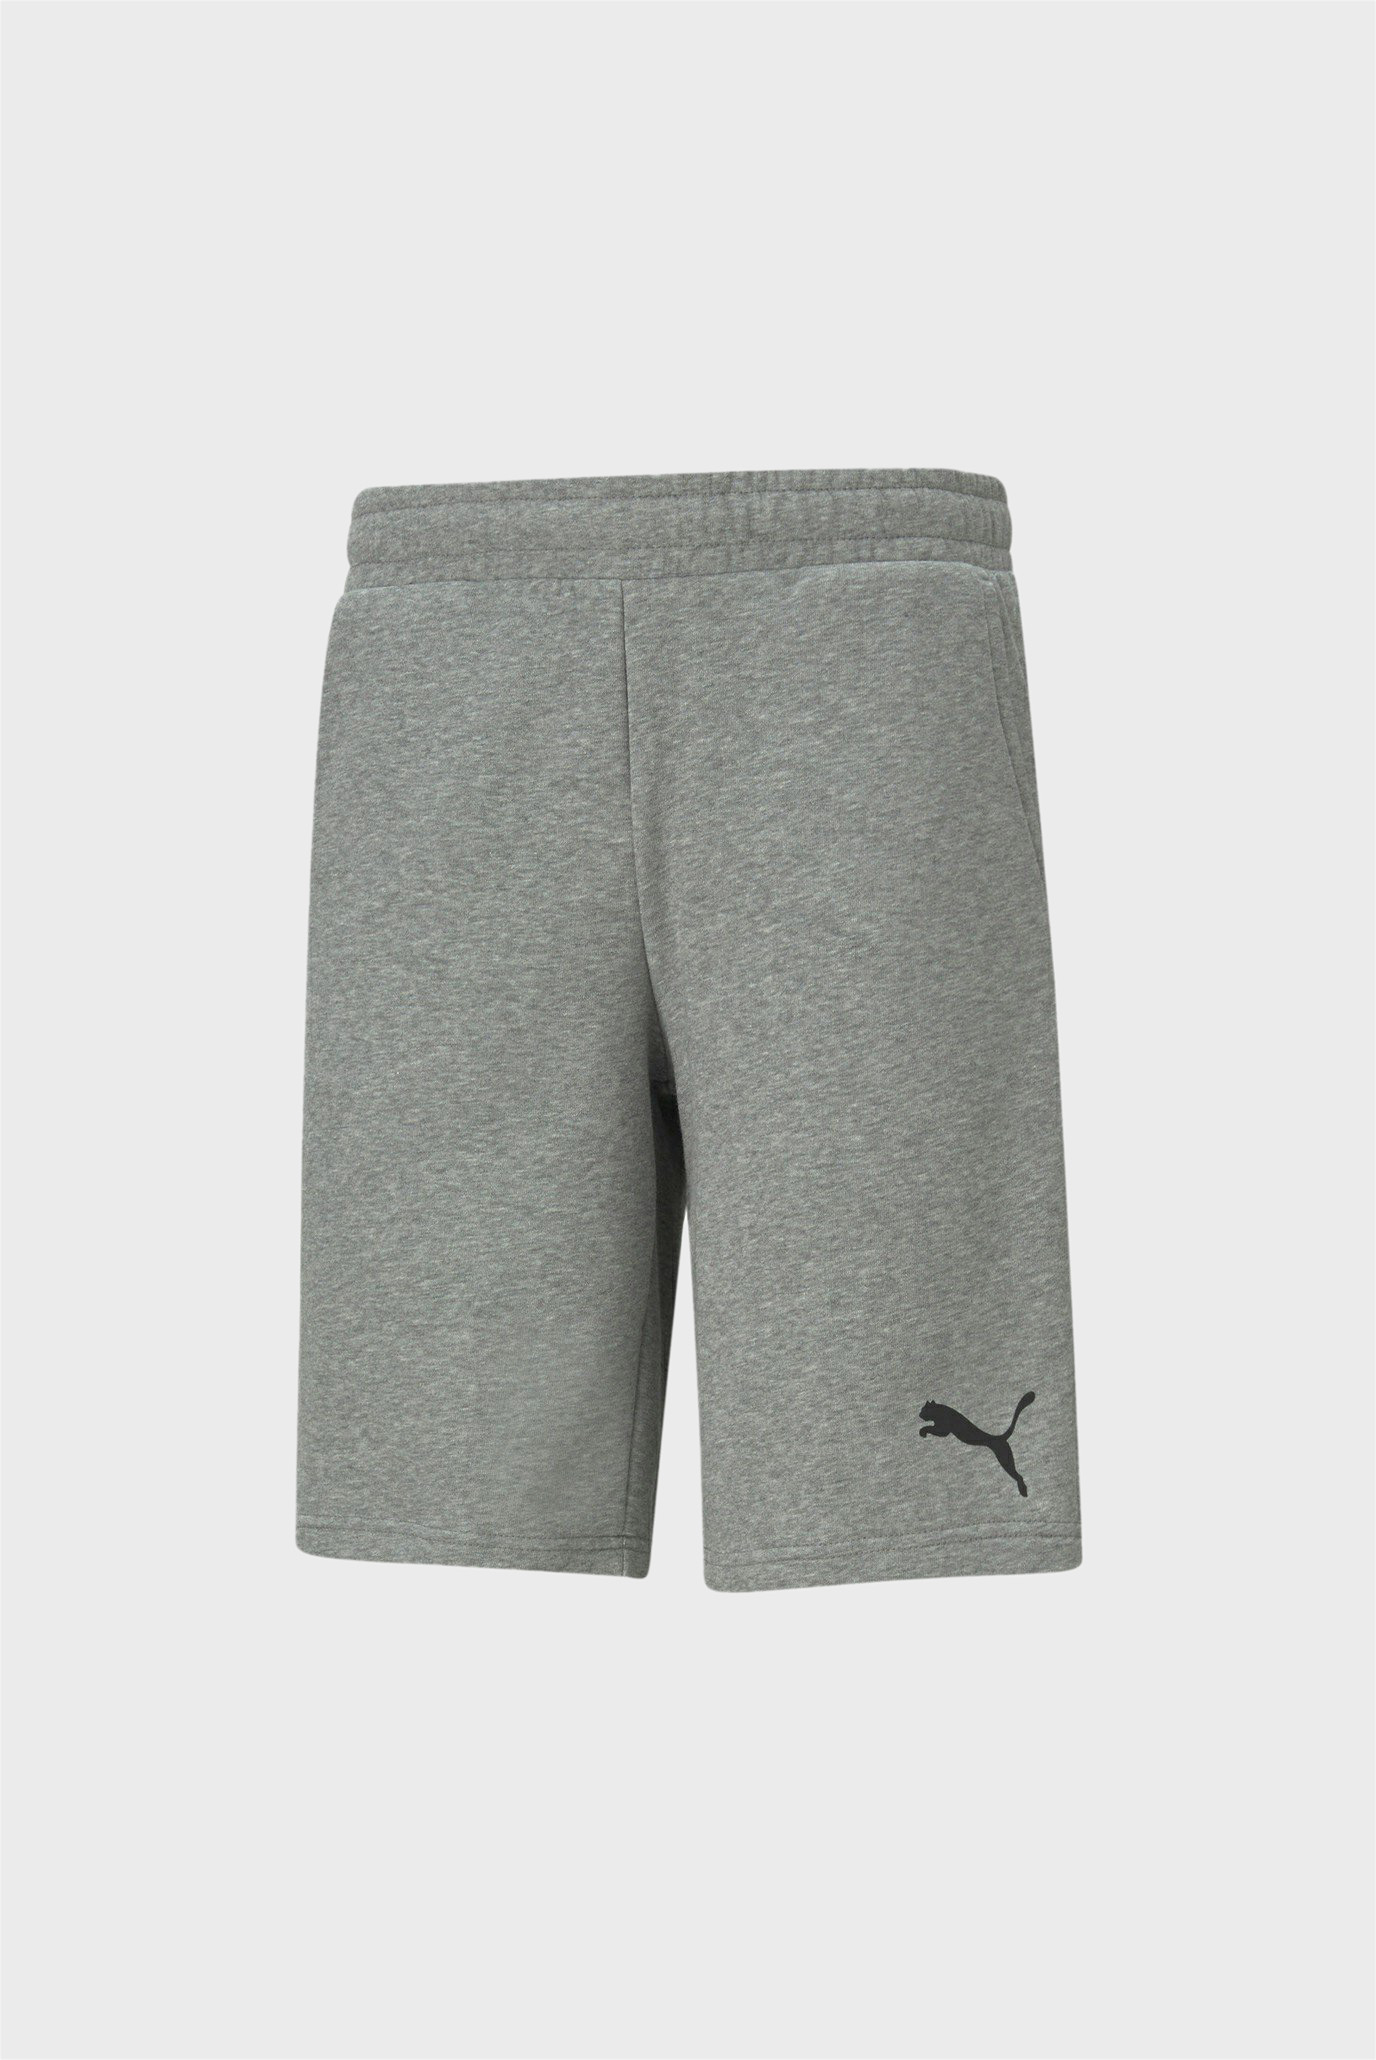 Чоловічі сірі шорти Essentials Men's Shorts 1